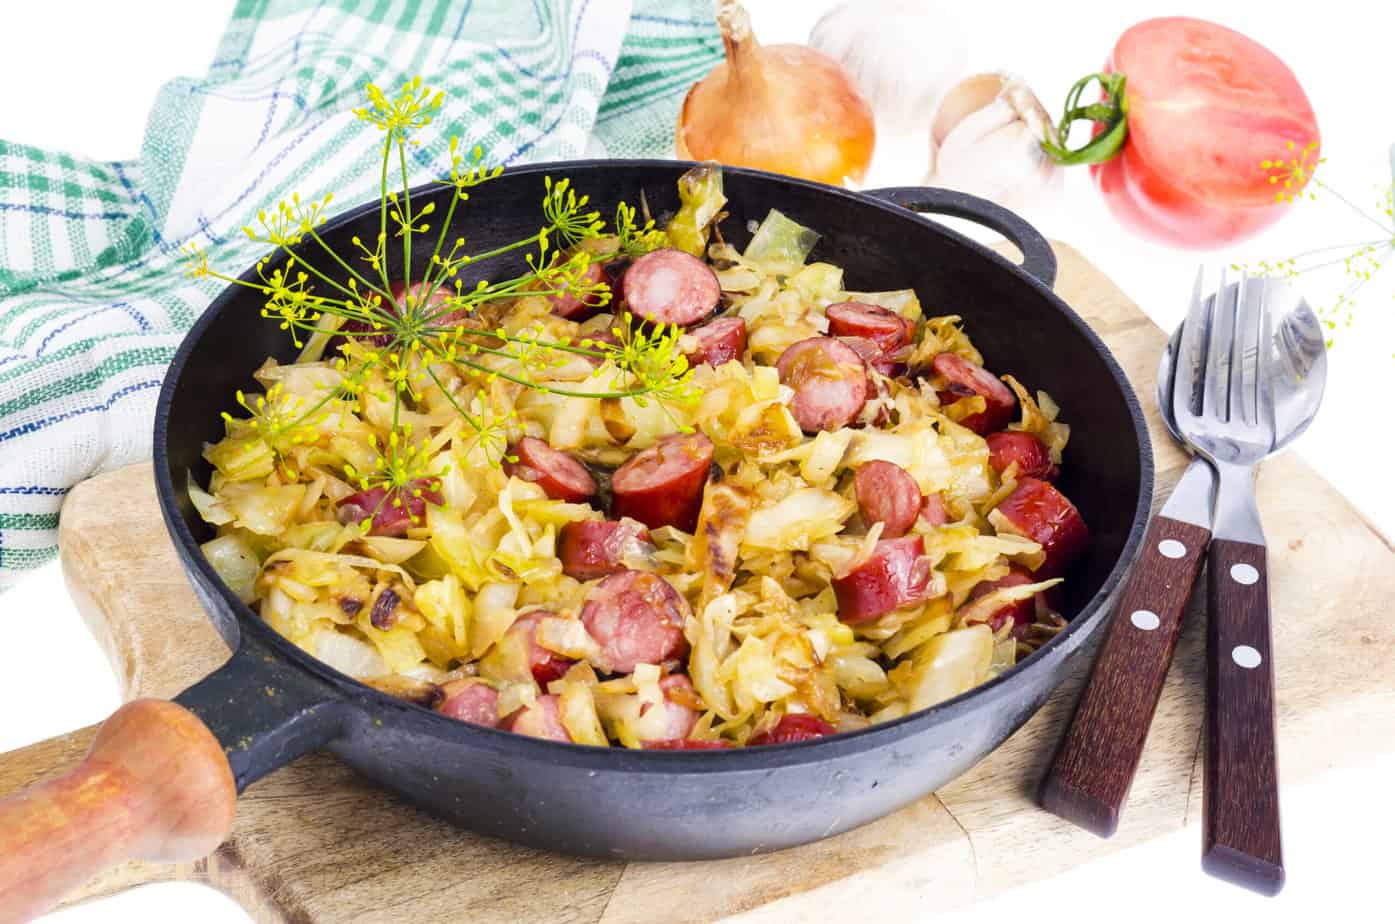 Traditional Polish kielbasa and sauerkraut served up hot